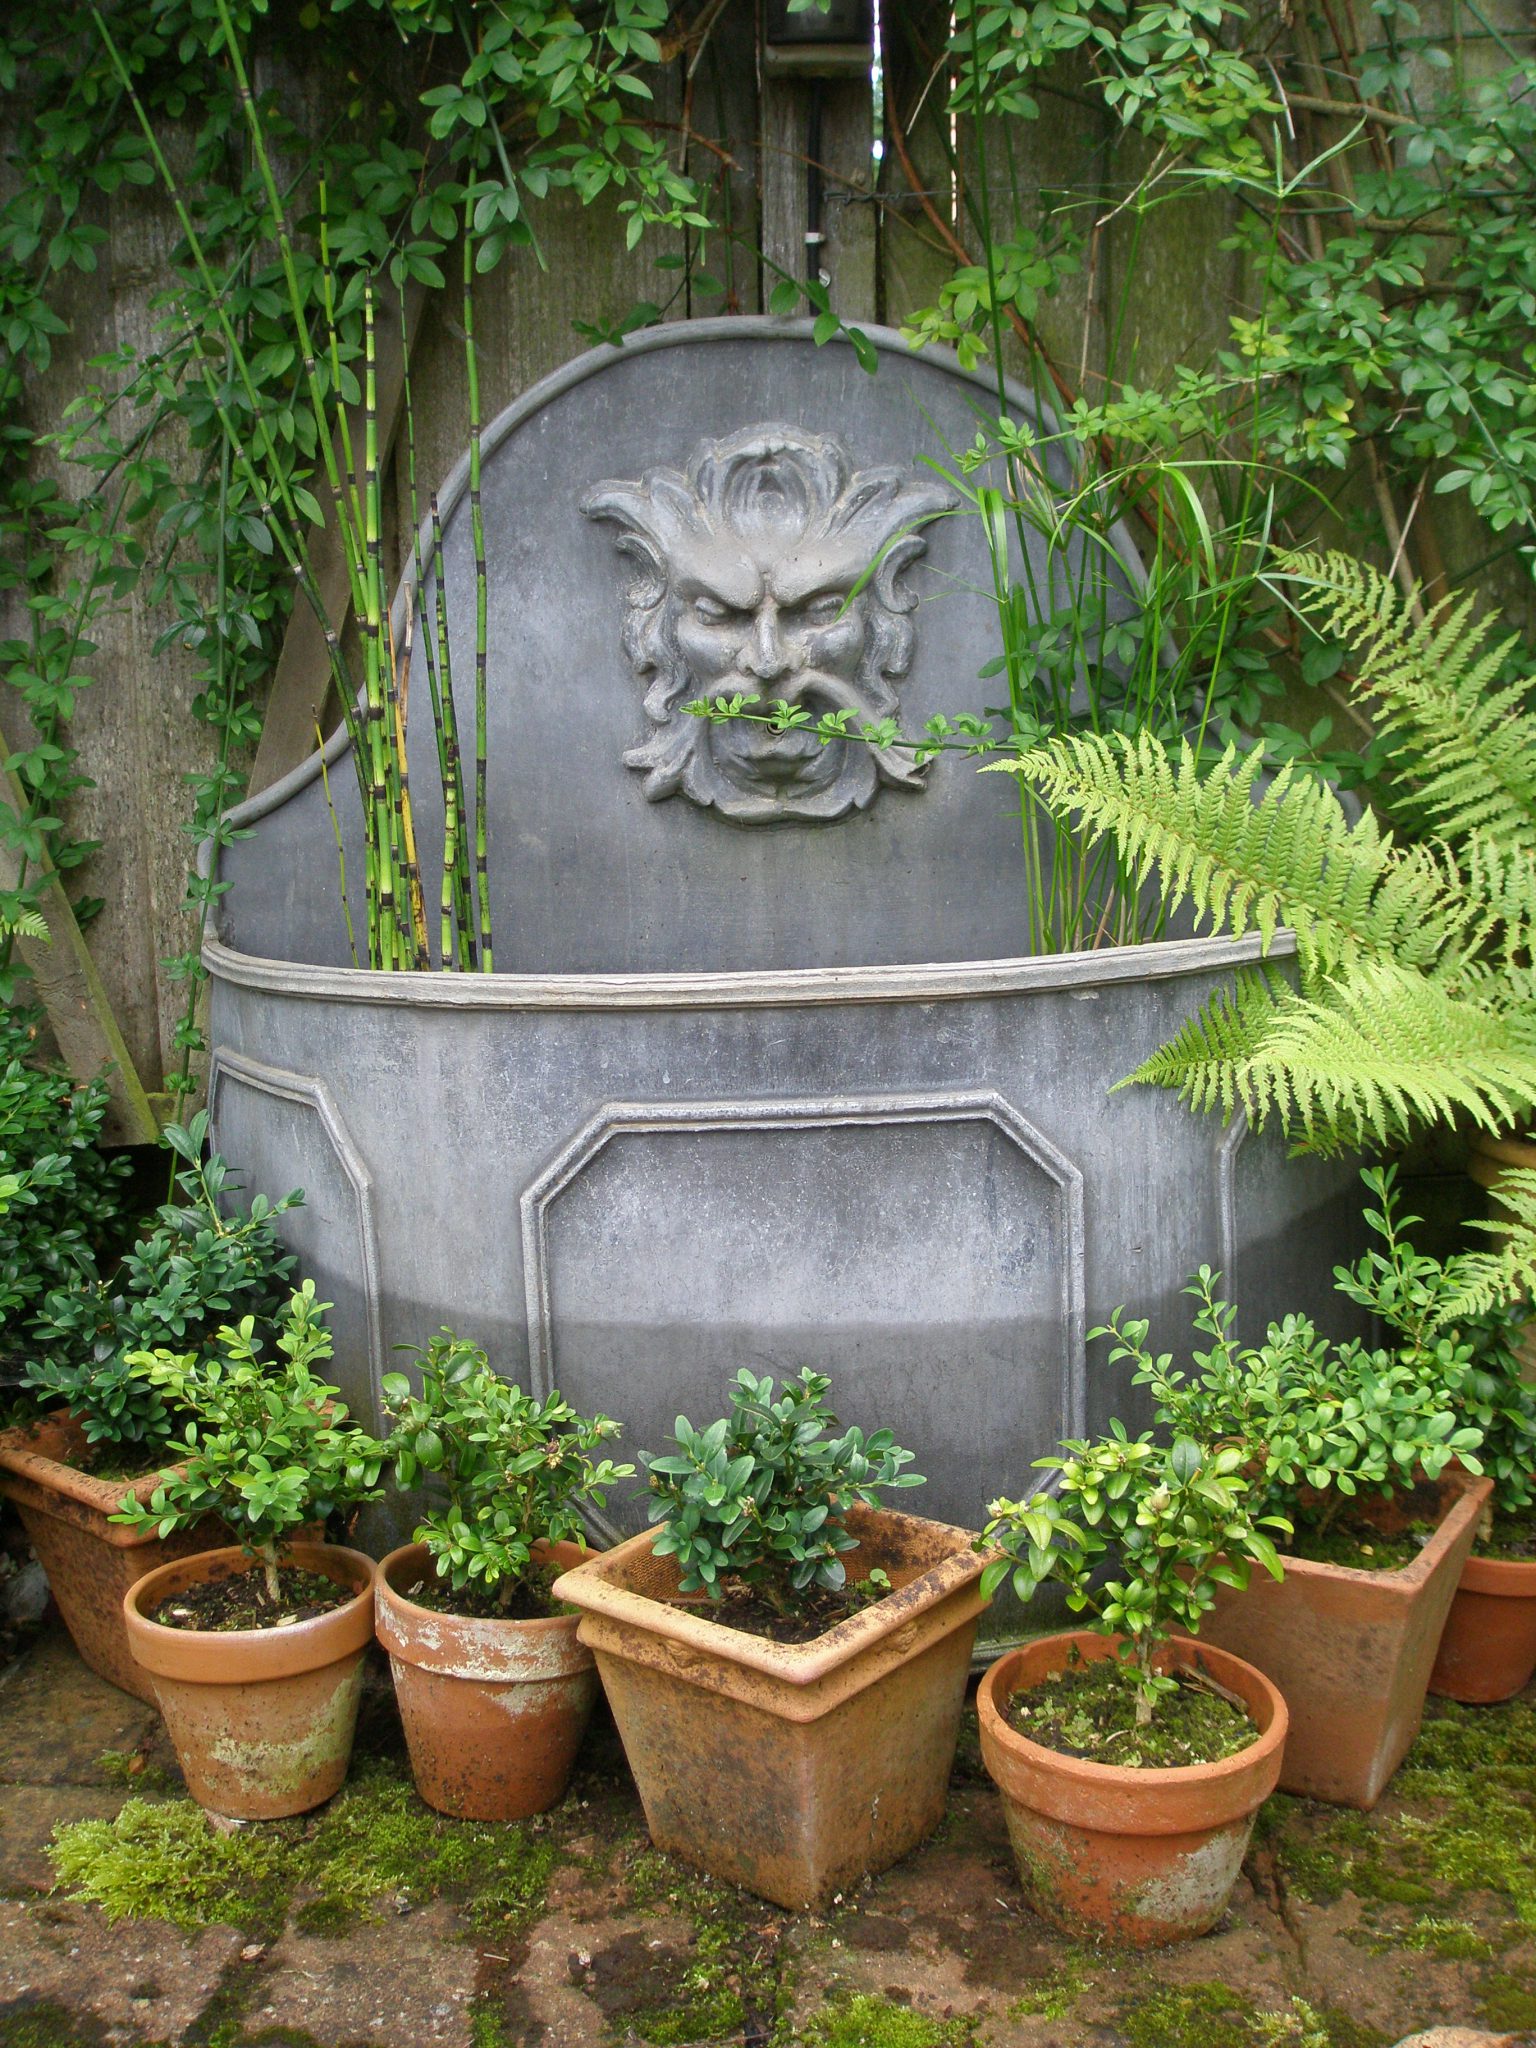 A classical lead fountain